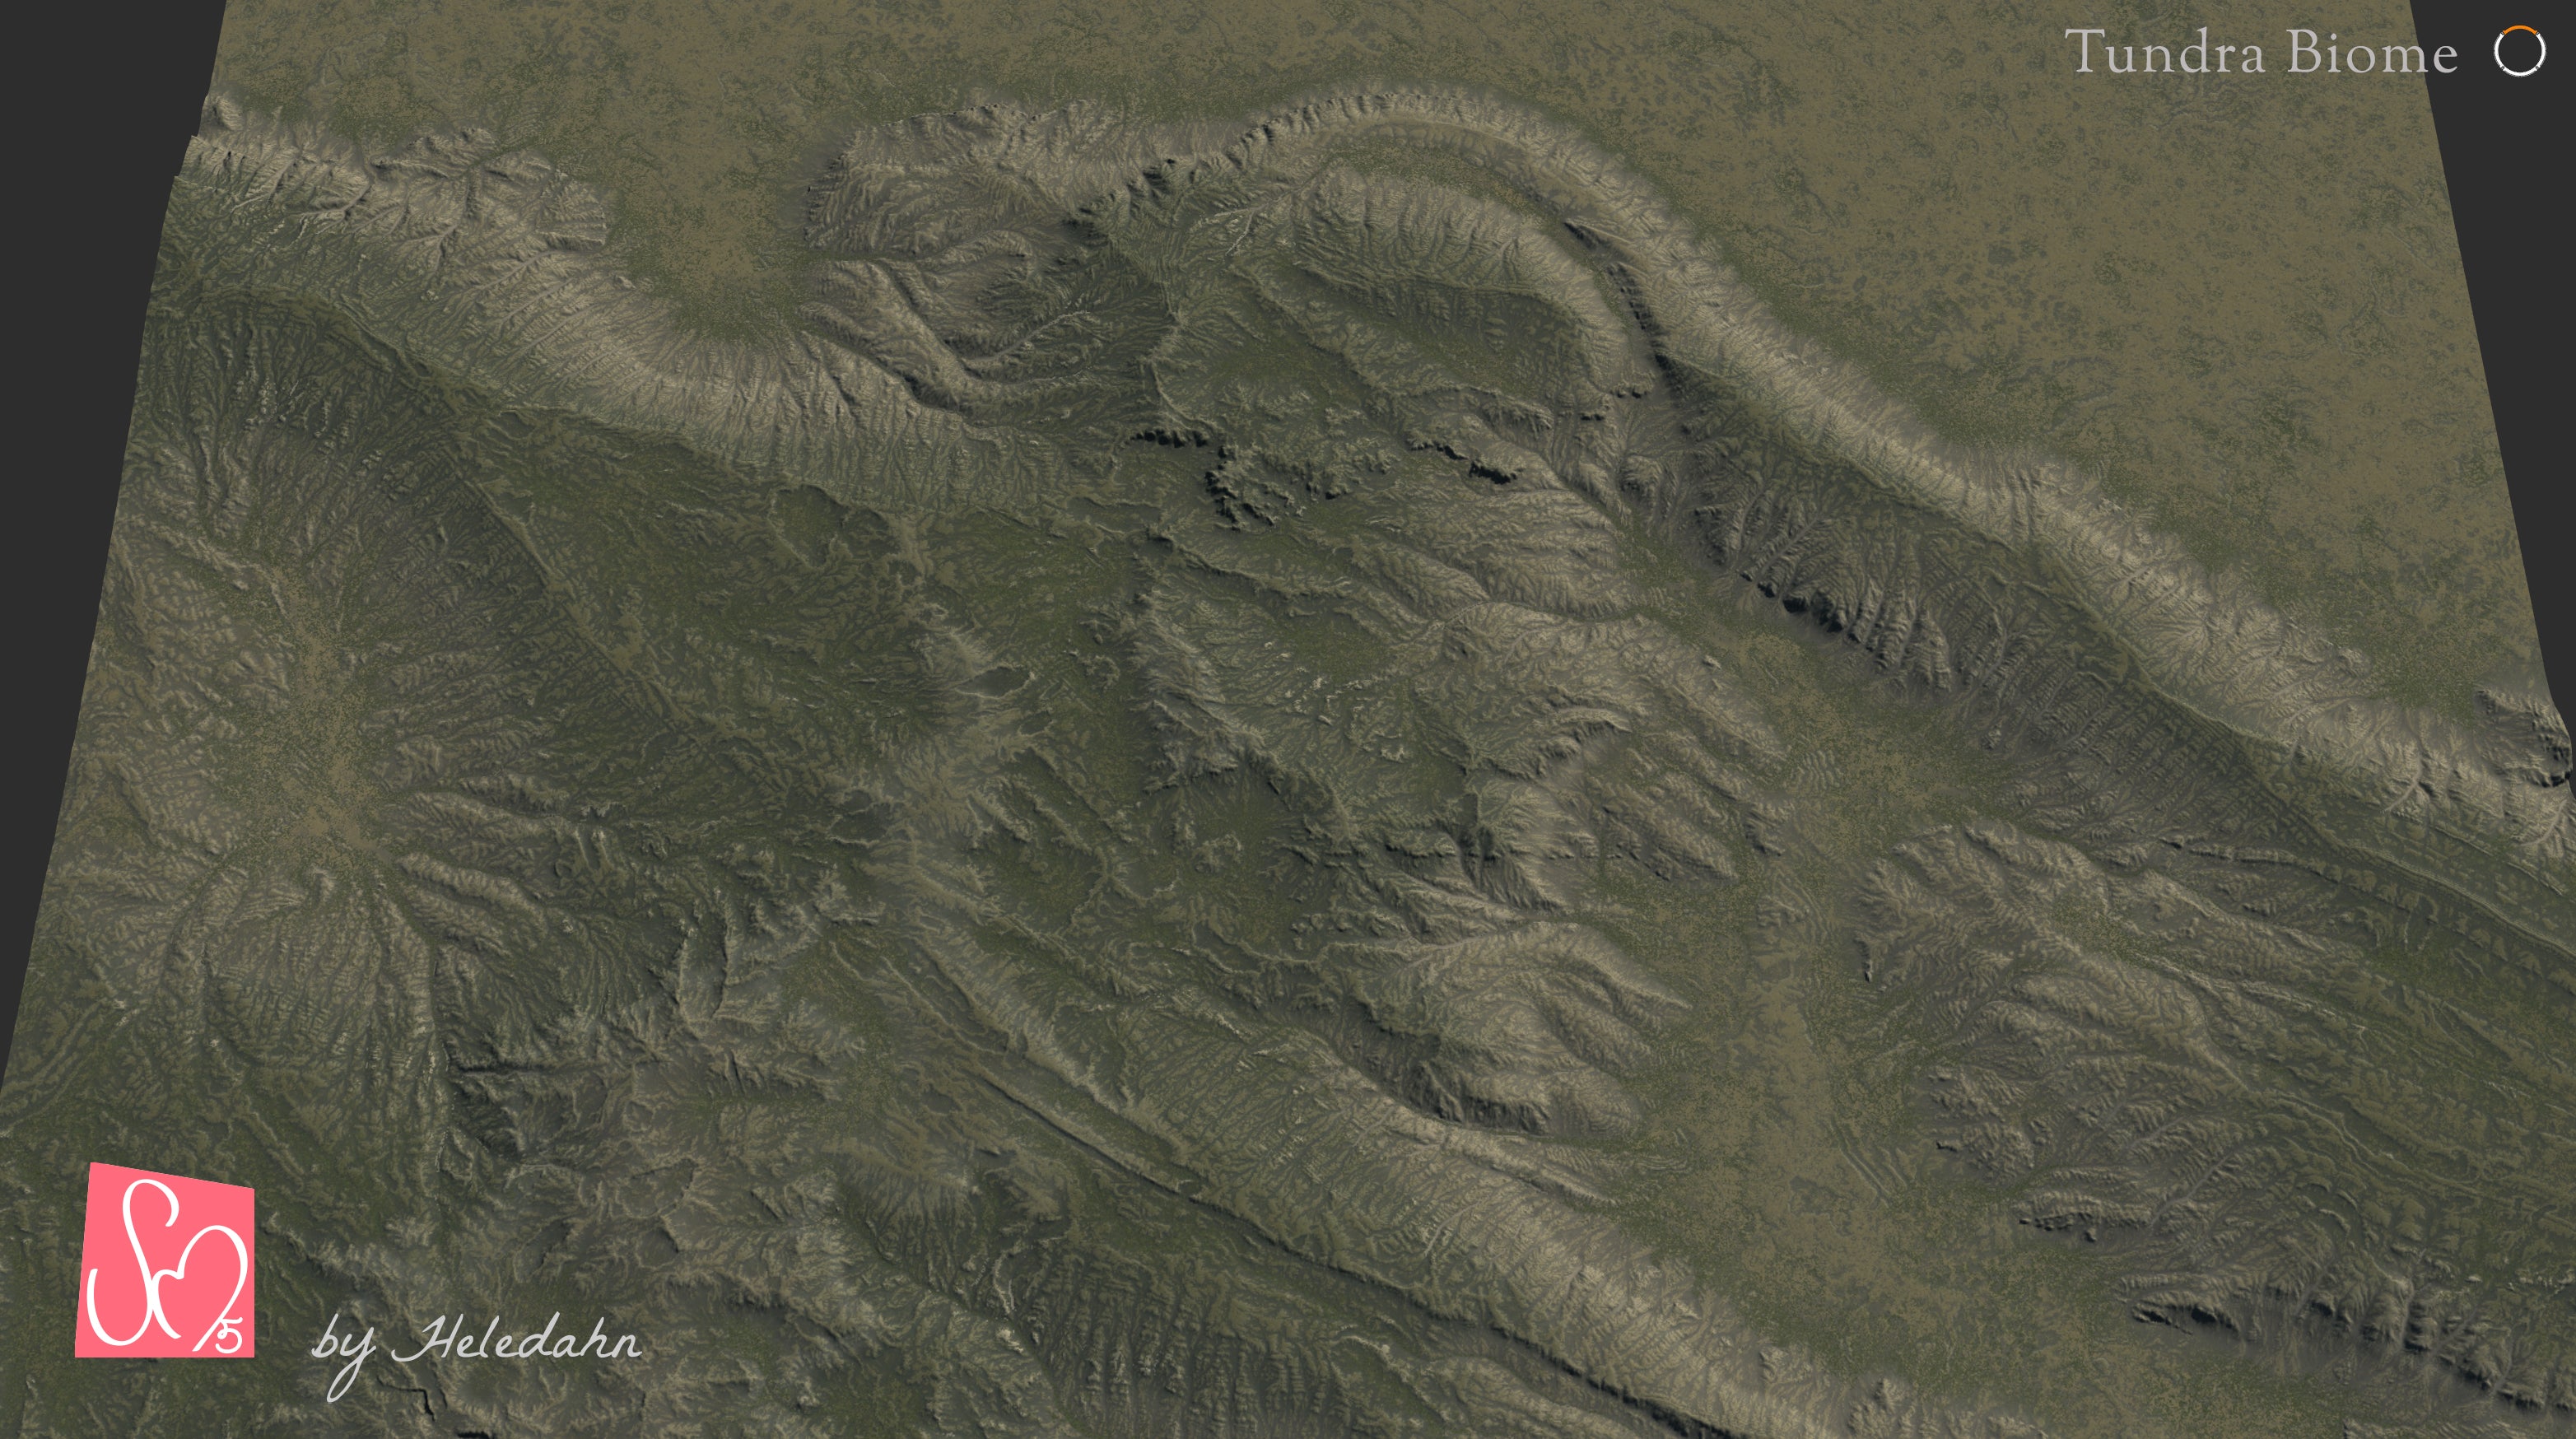 Gaea tundra biome terrain 3D model by Heledahn